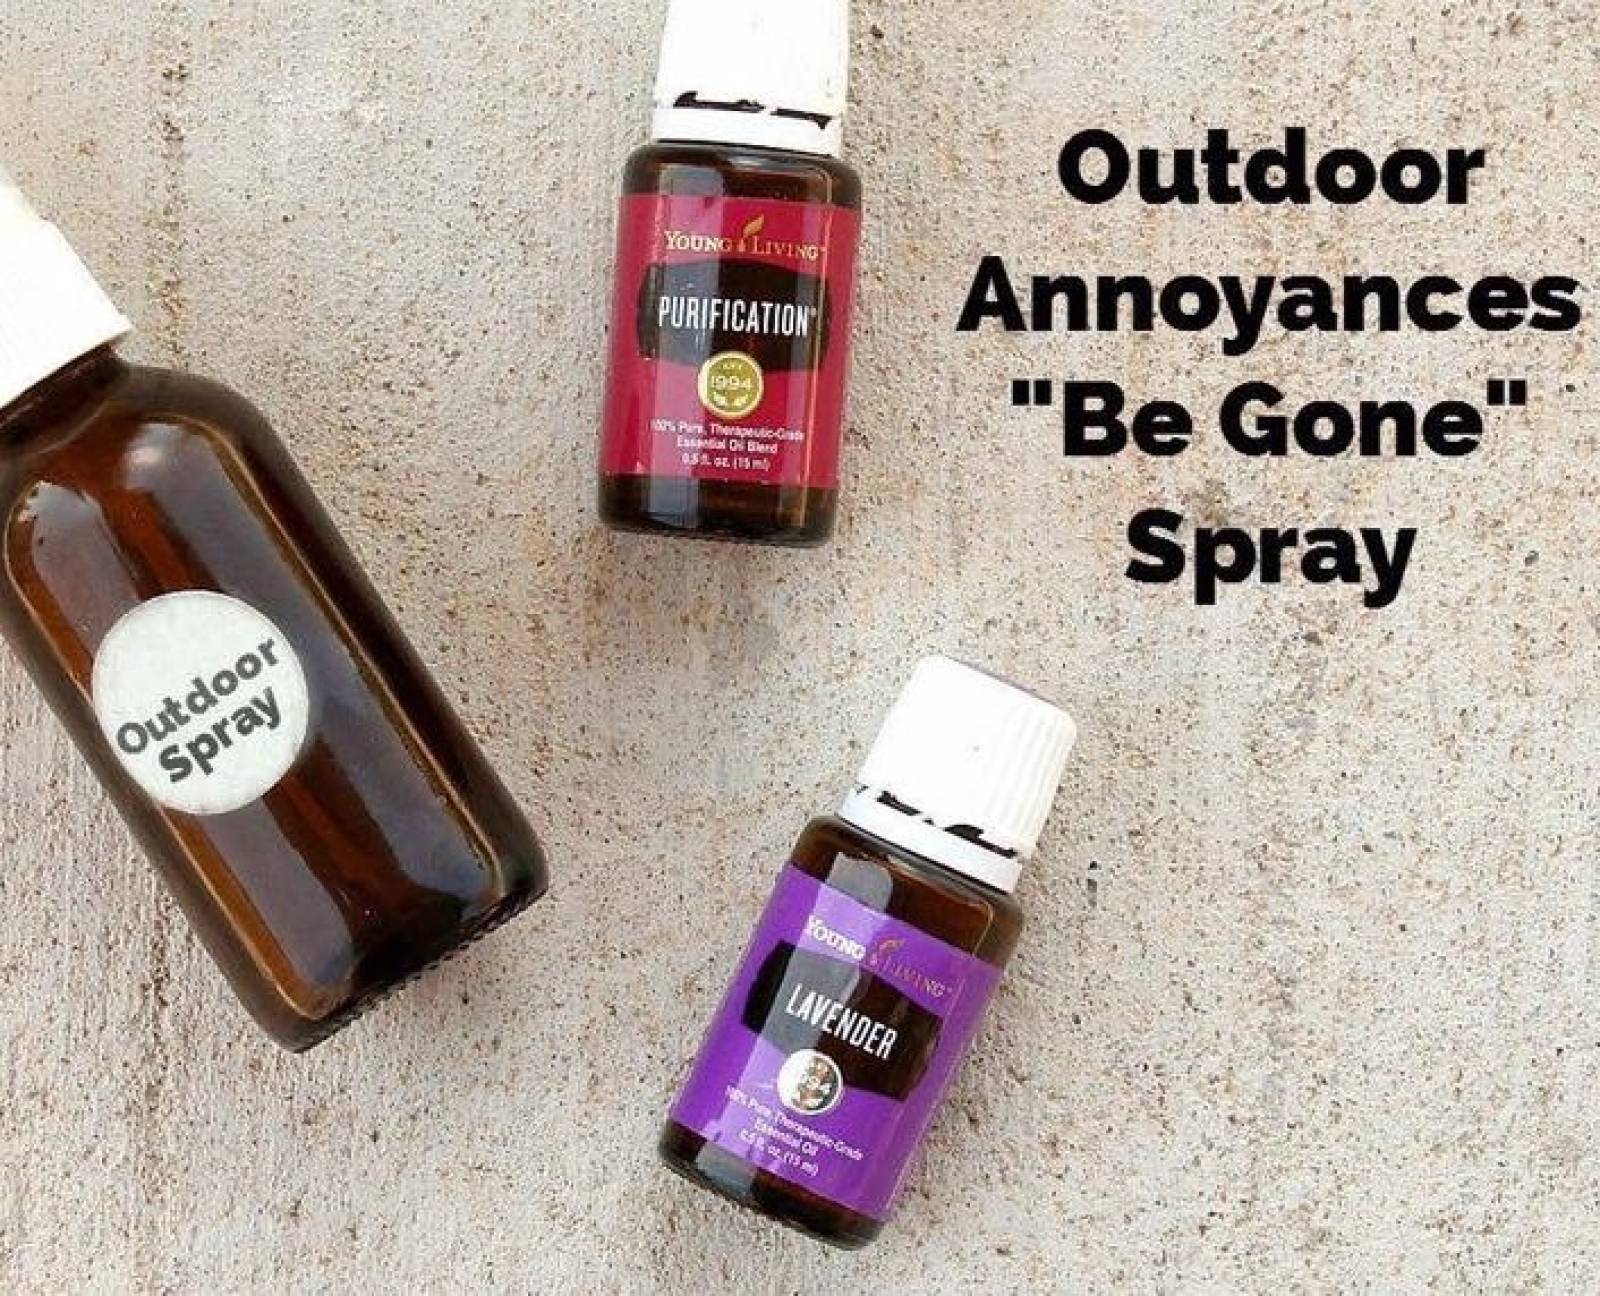 Bug "Be Gone Spray"